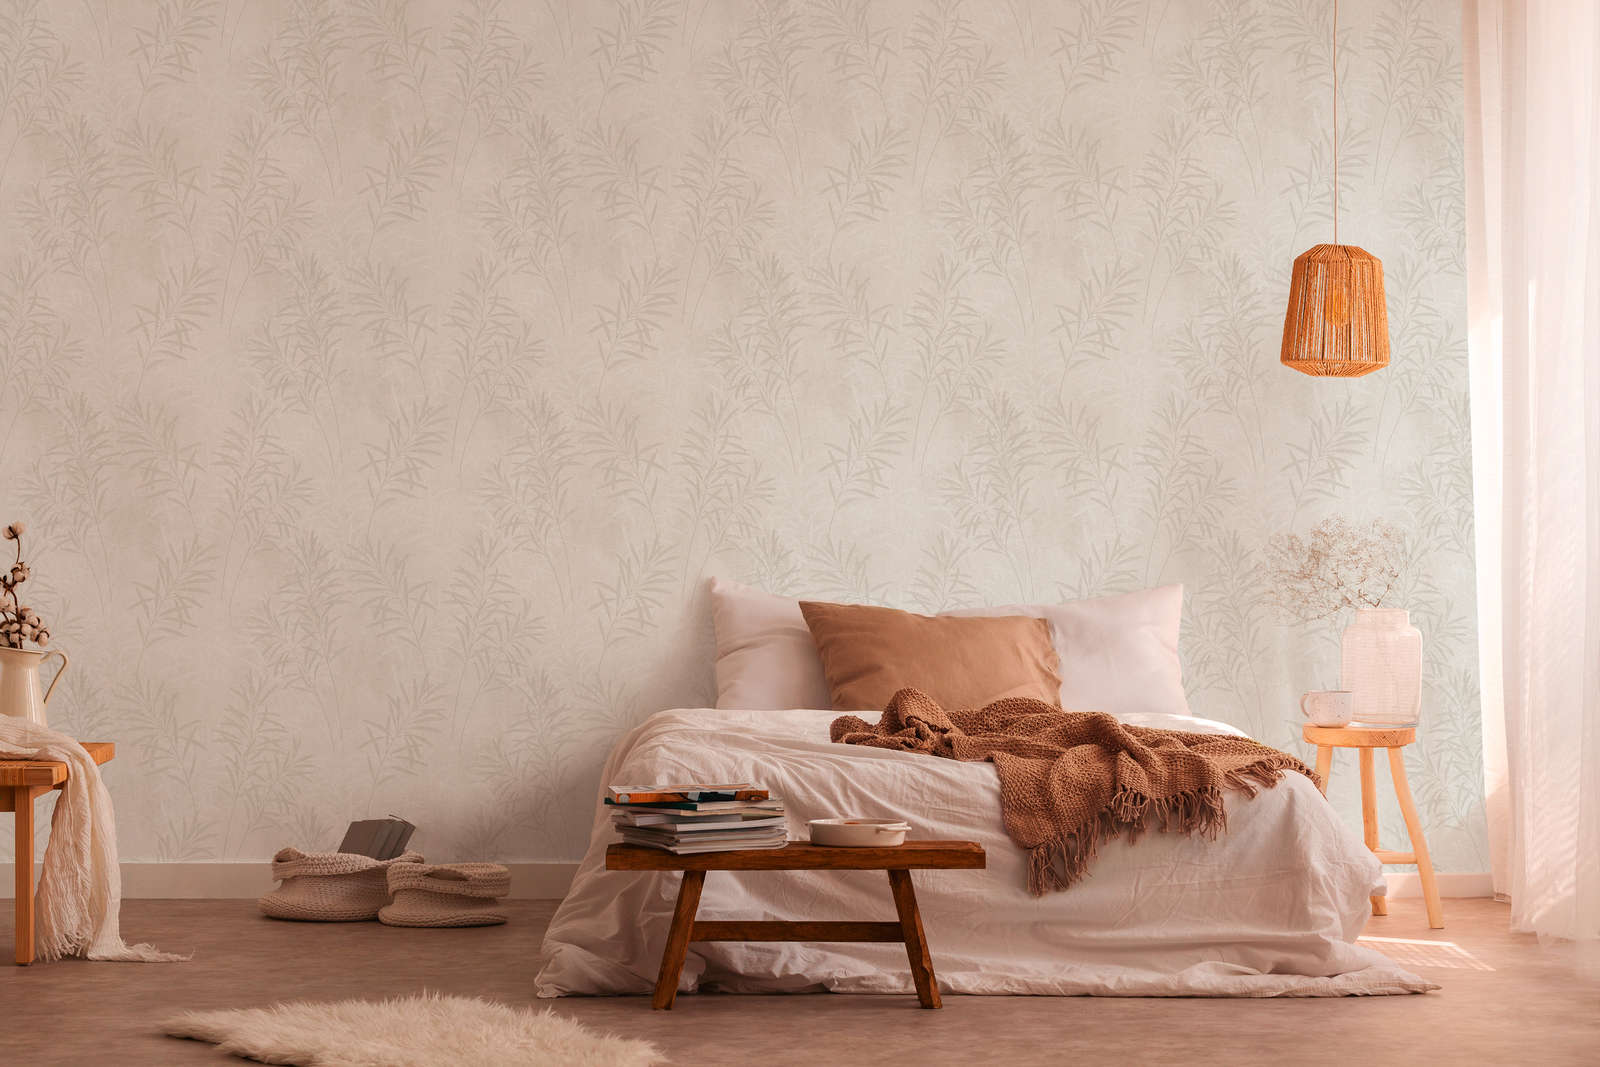             Scandinavian style non-woven wallpaper with floral grasses - cream, beige, metallic
        